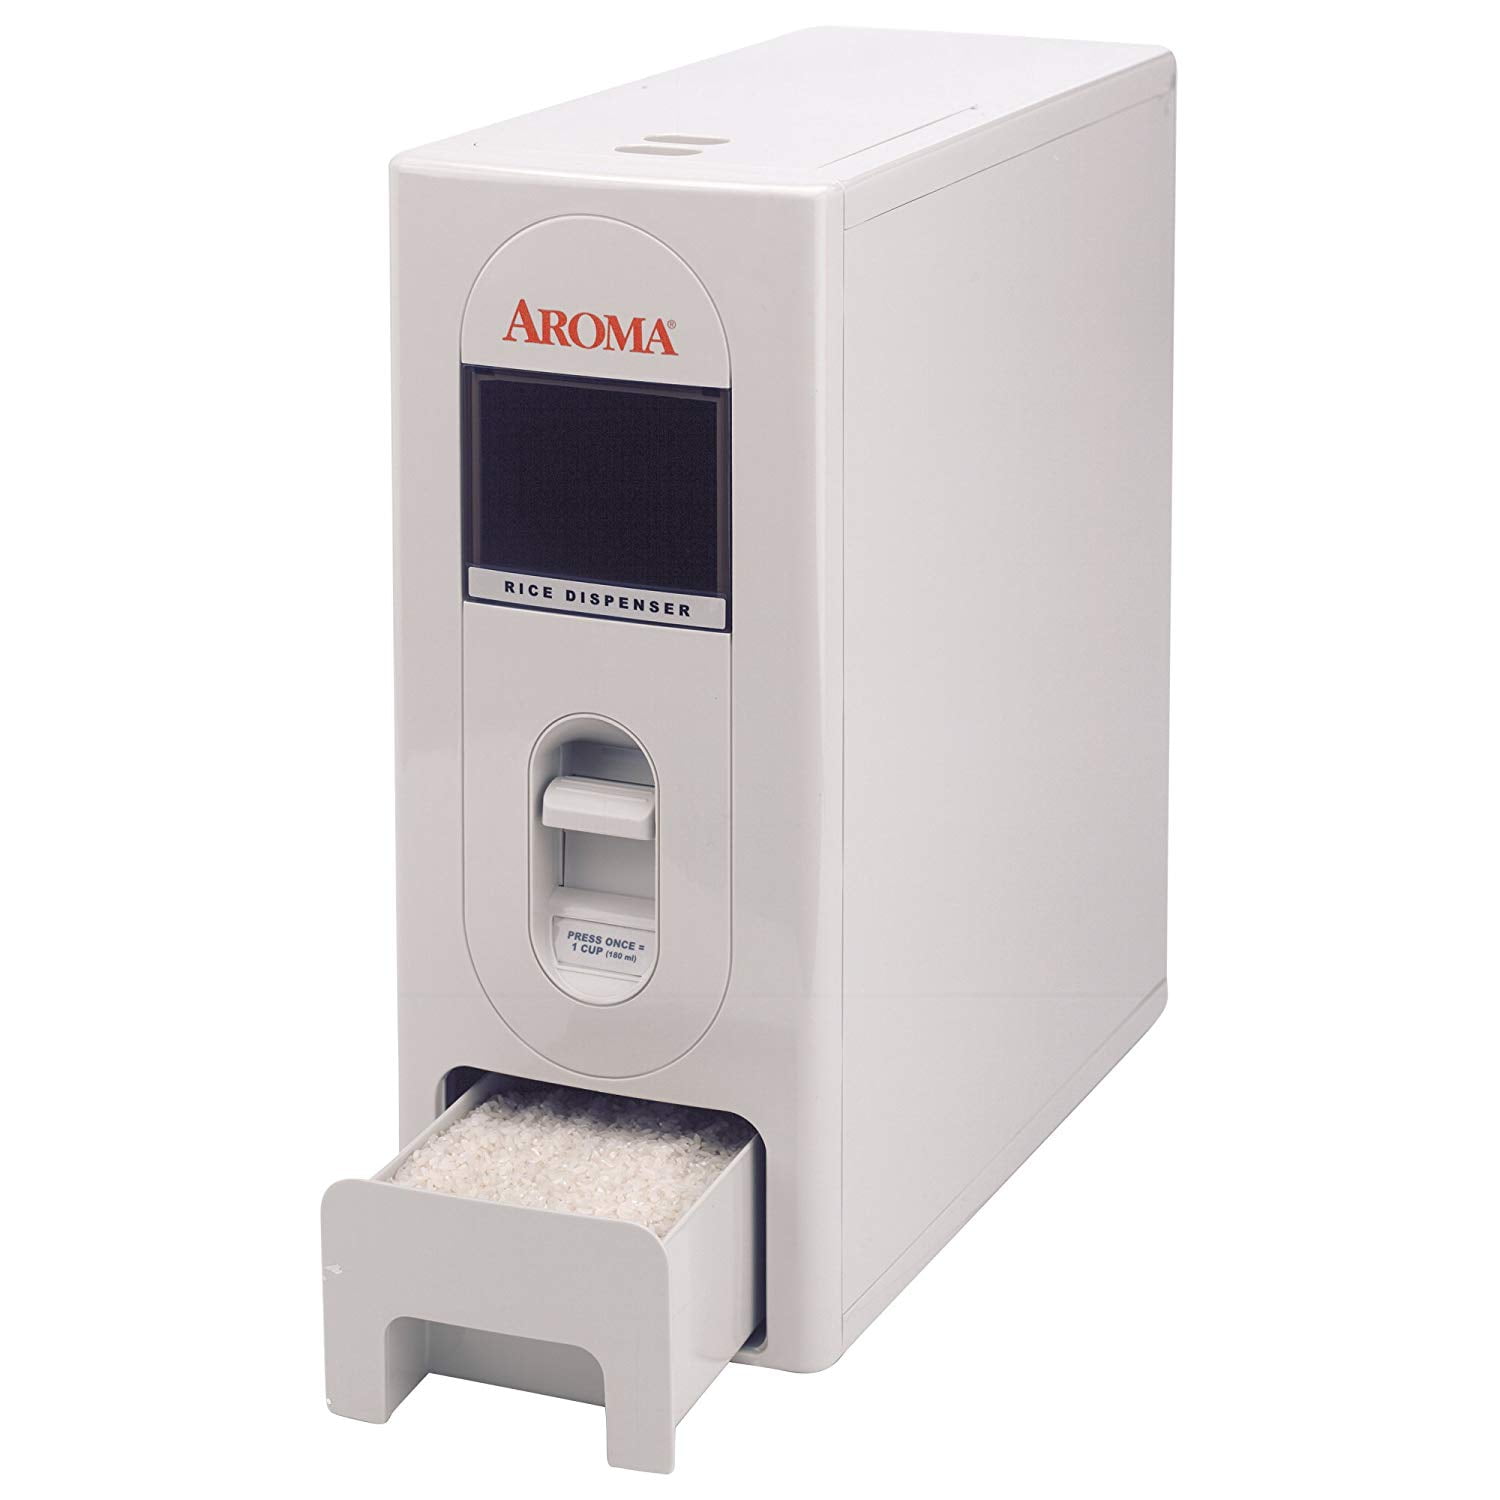 Aroma® 22lbs. Rice Dispenser -white - Walmart.com